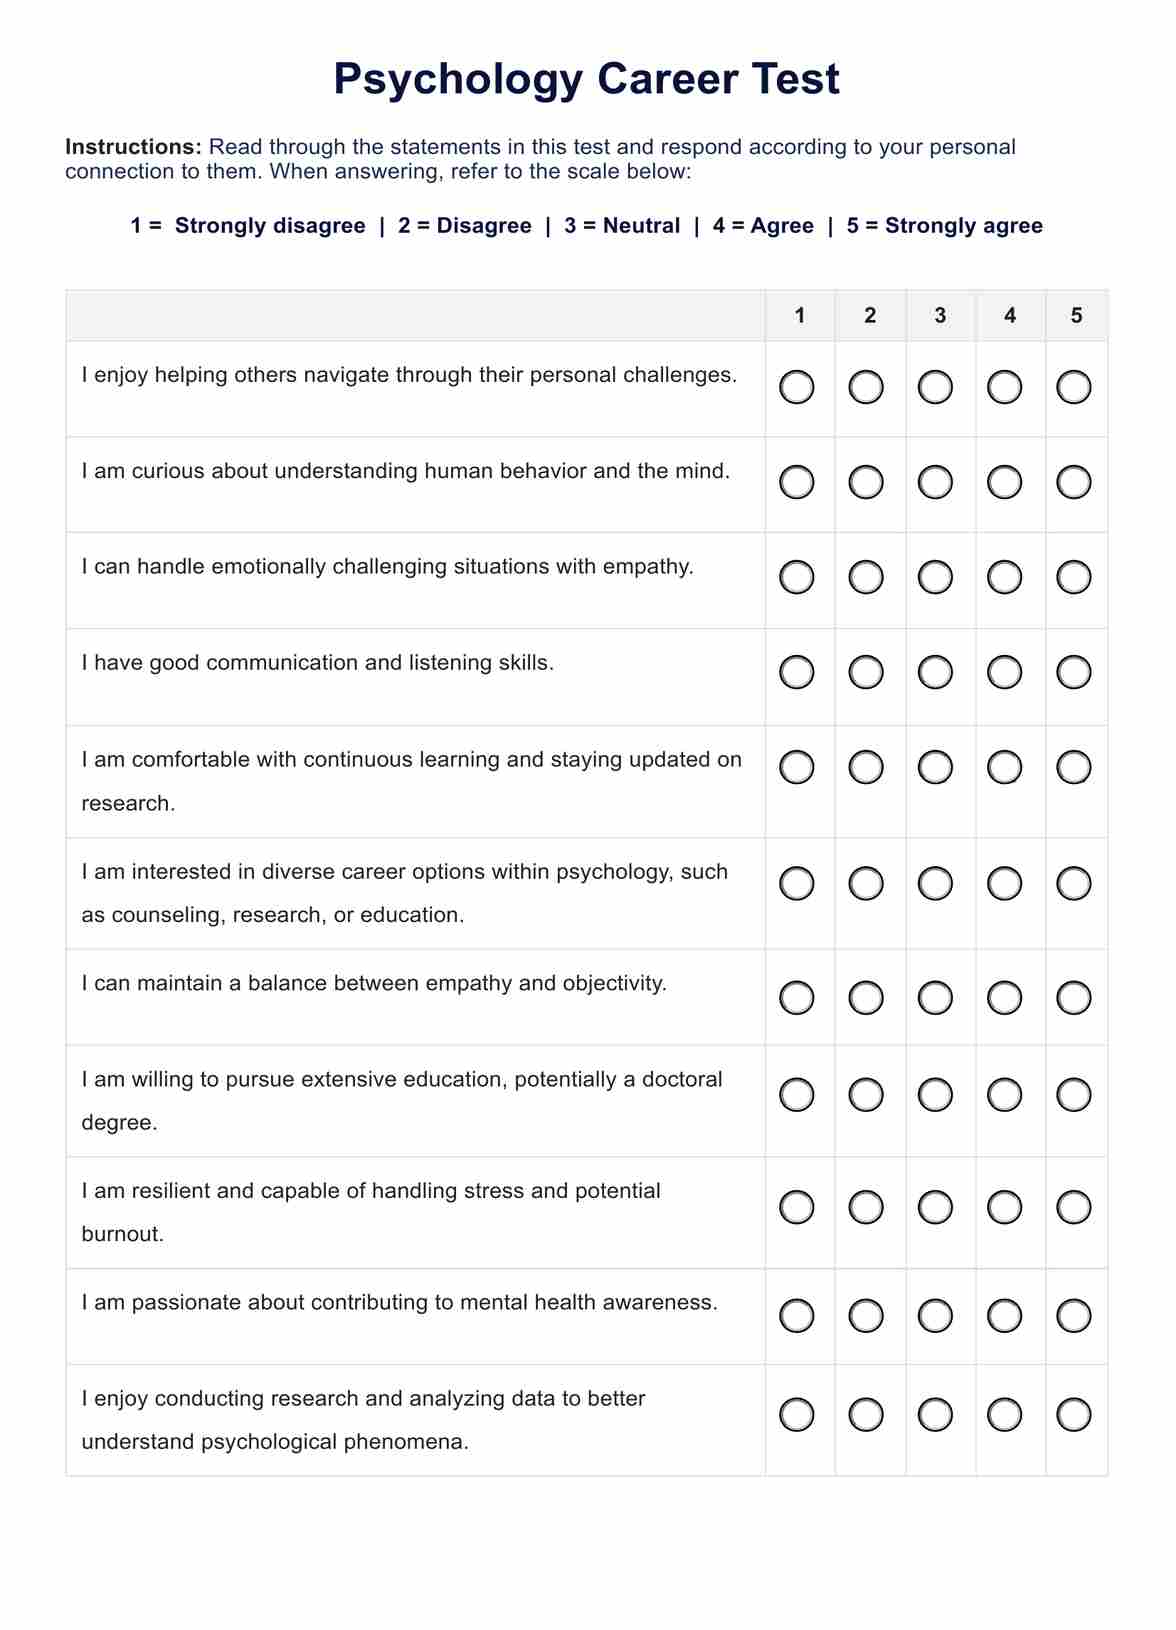 Psychology Career Test PDF Example